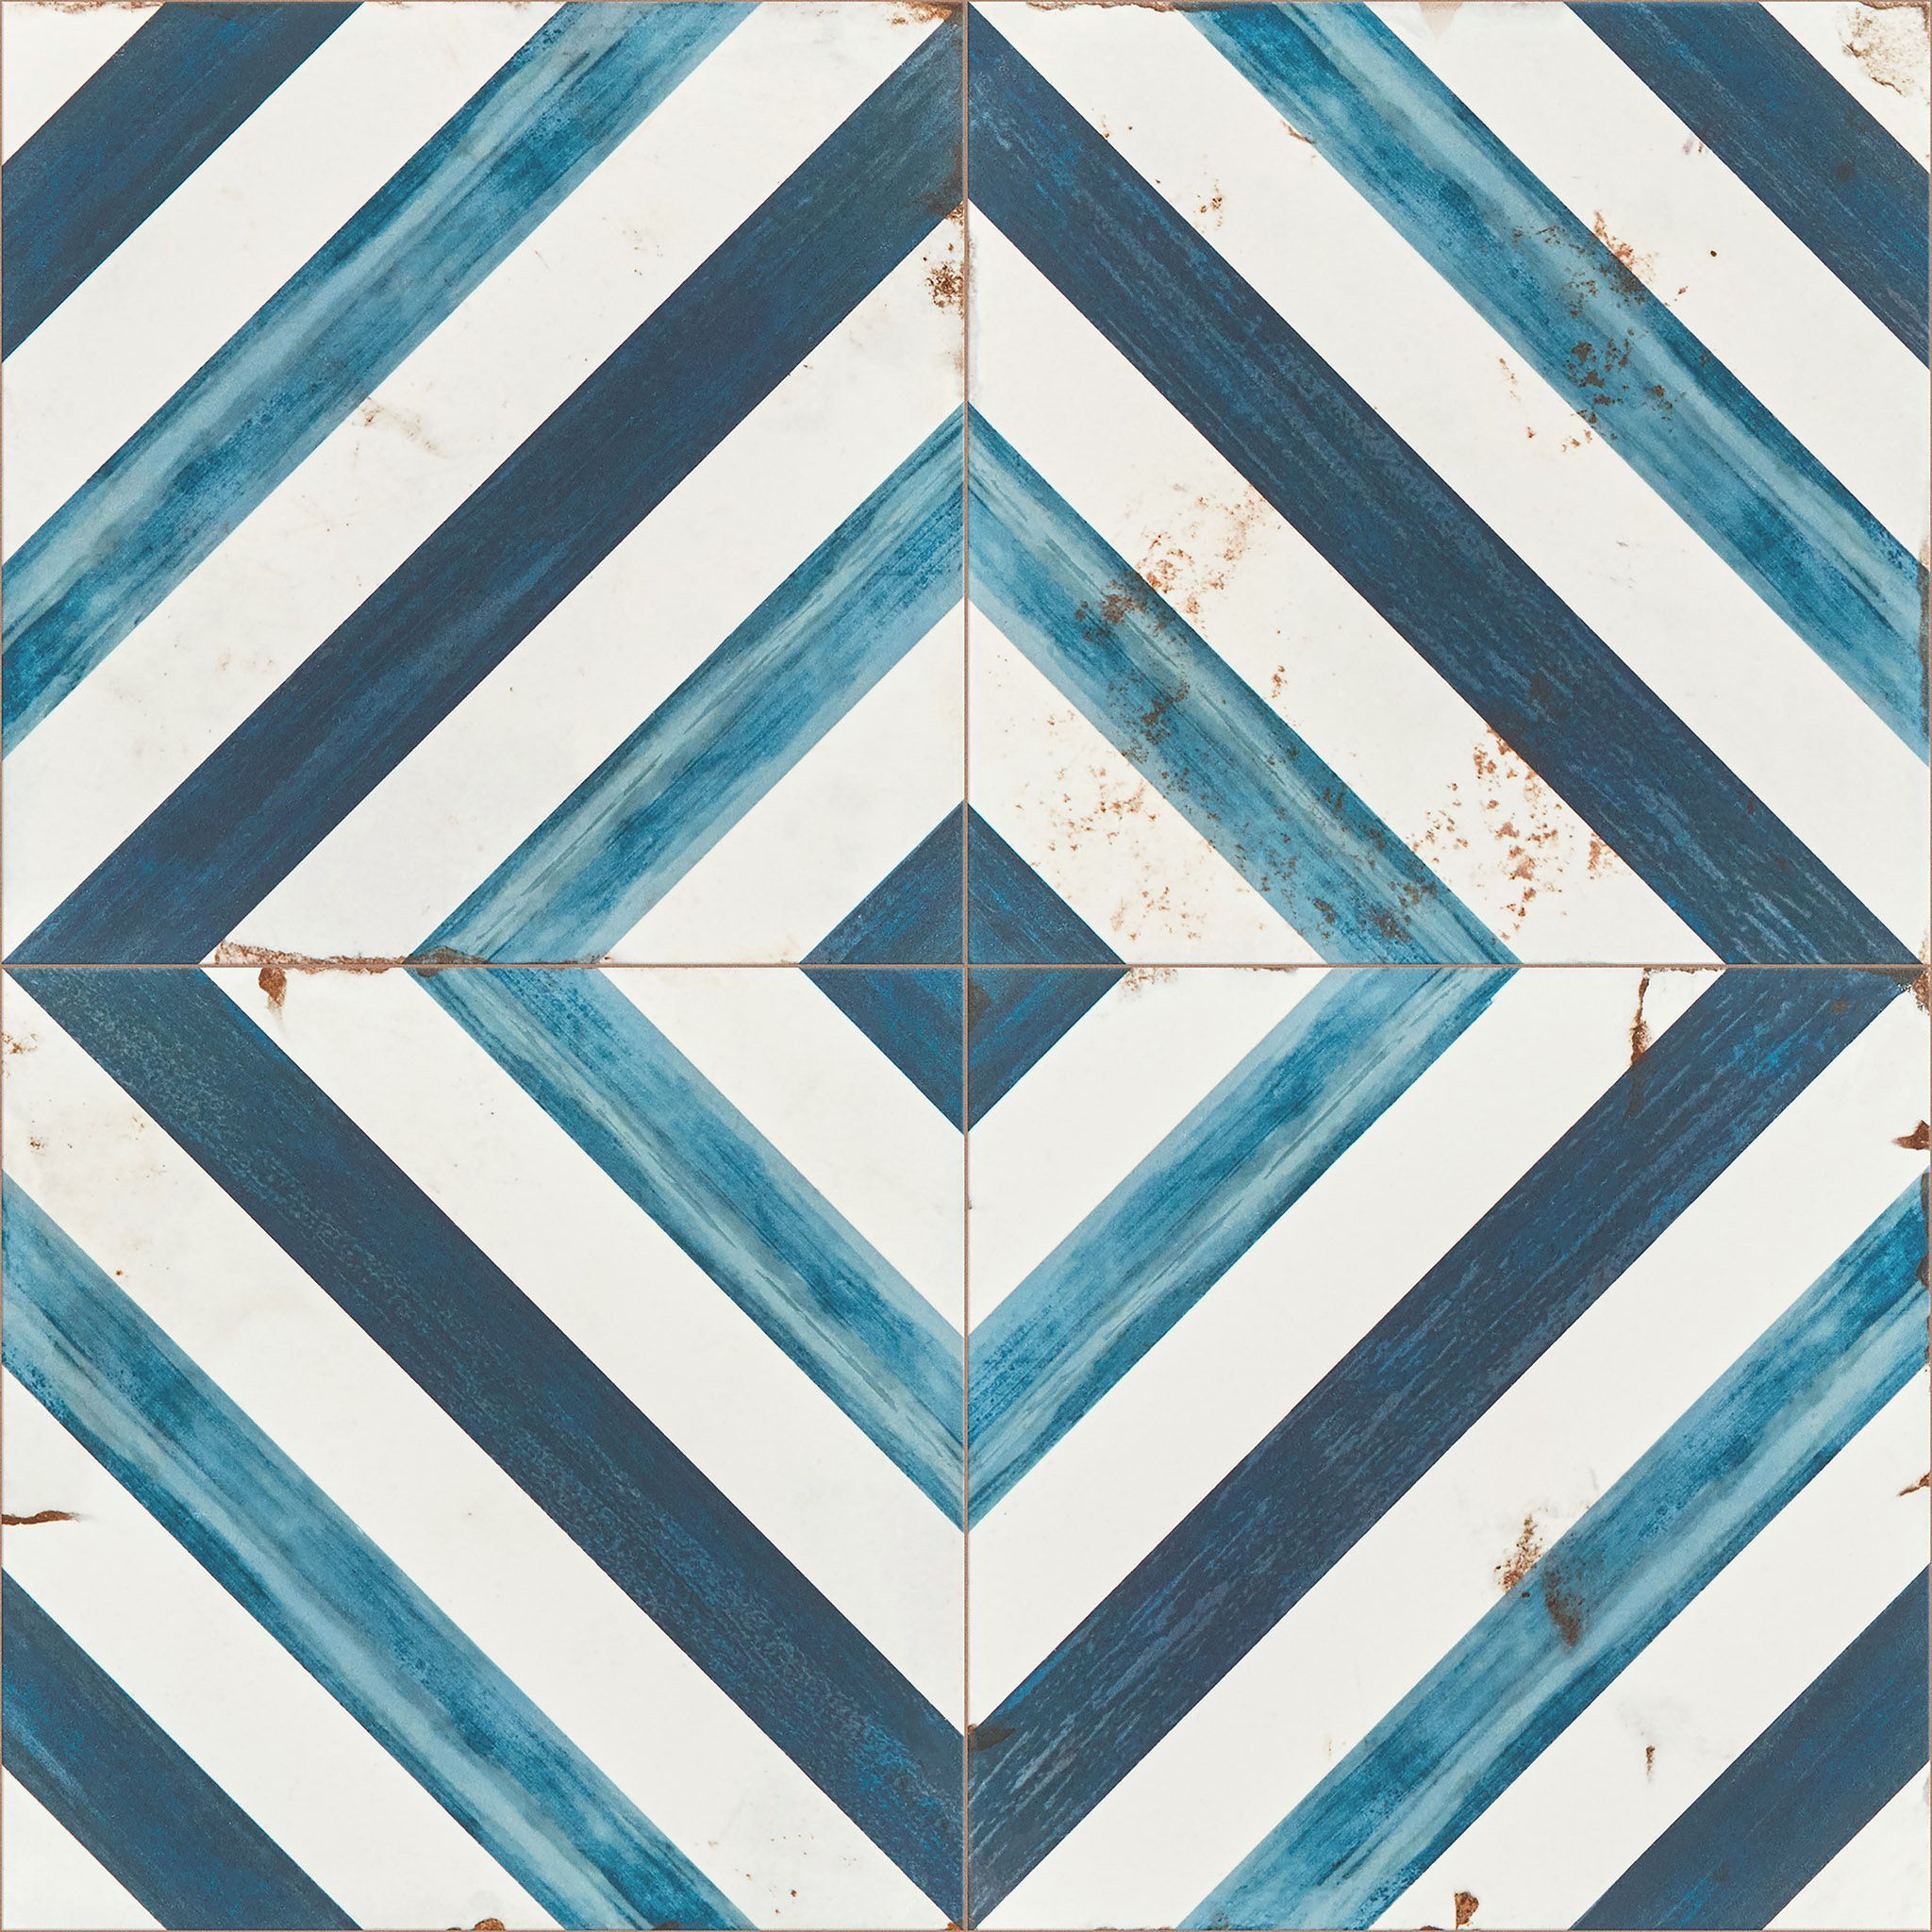 rhombus designed tile flooring from Katy Carpets in Katy, TX